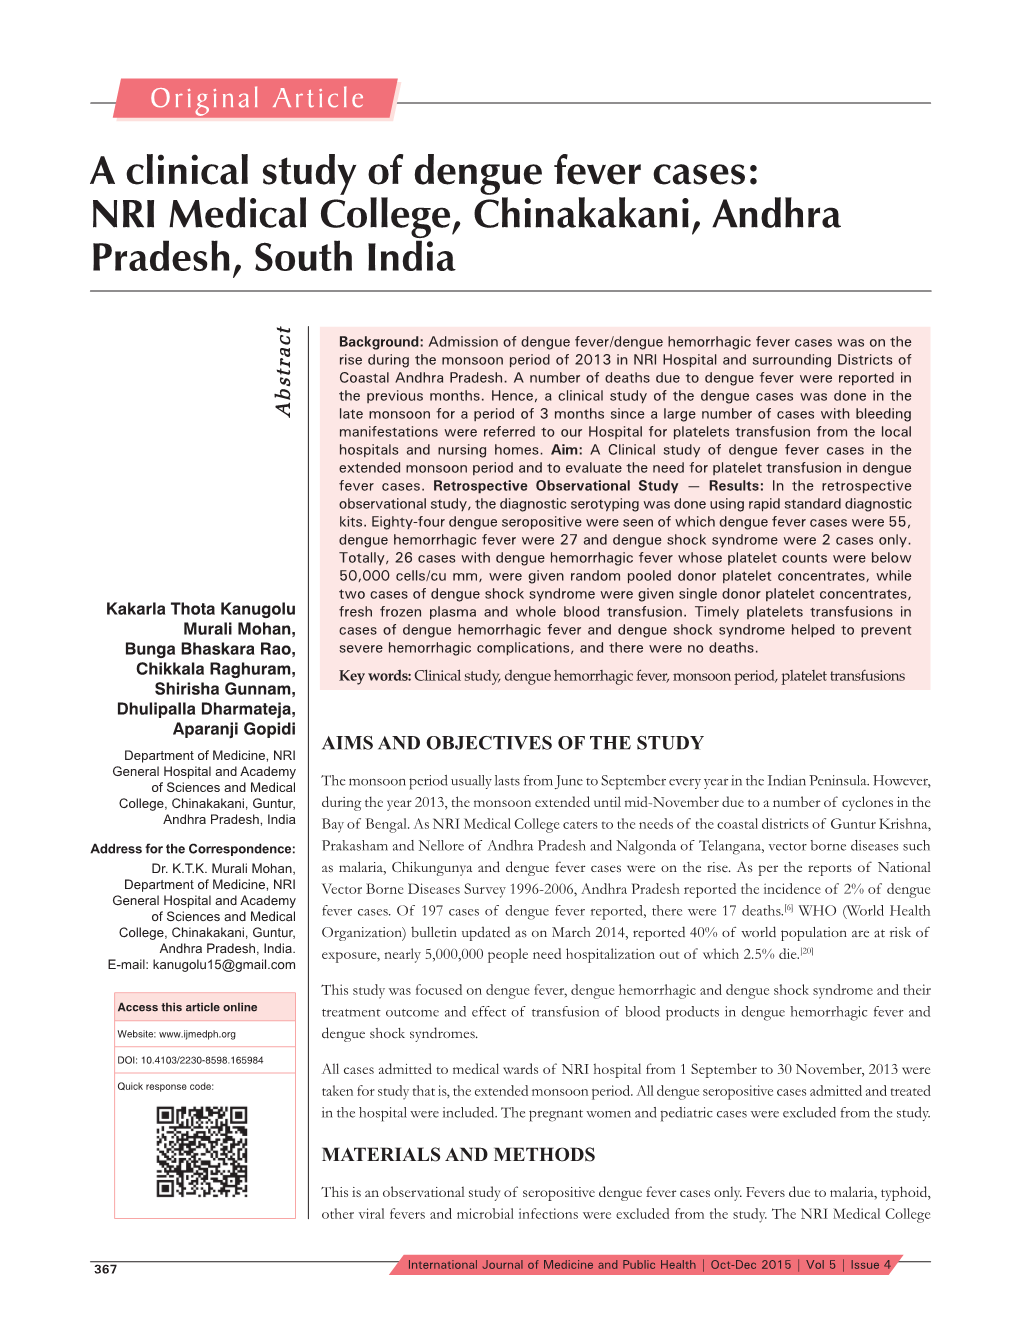 A Clinical Study of Dengue Fever Cases: NRI Medical College, Chinakakani, Andhra Pradesh, South India